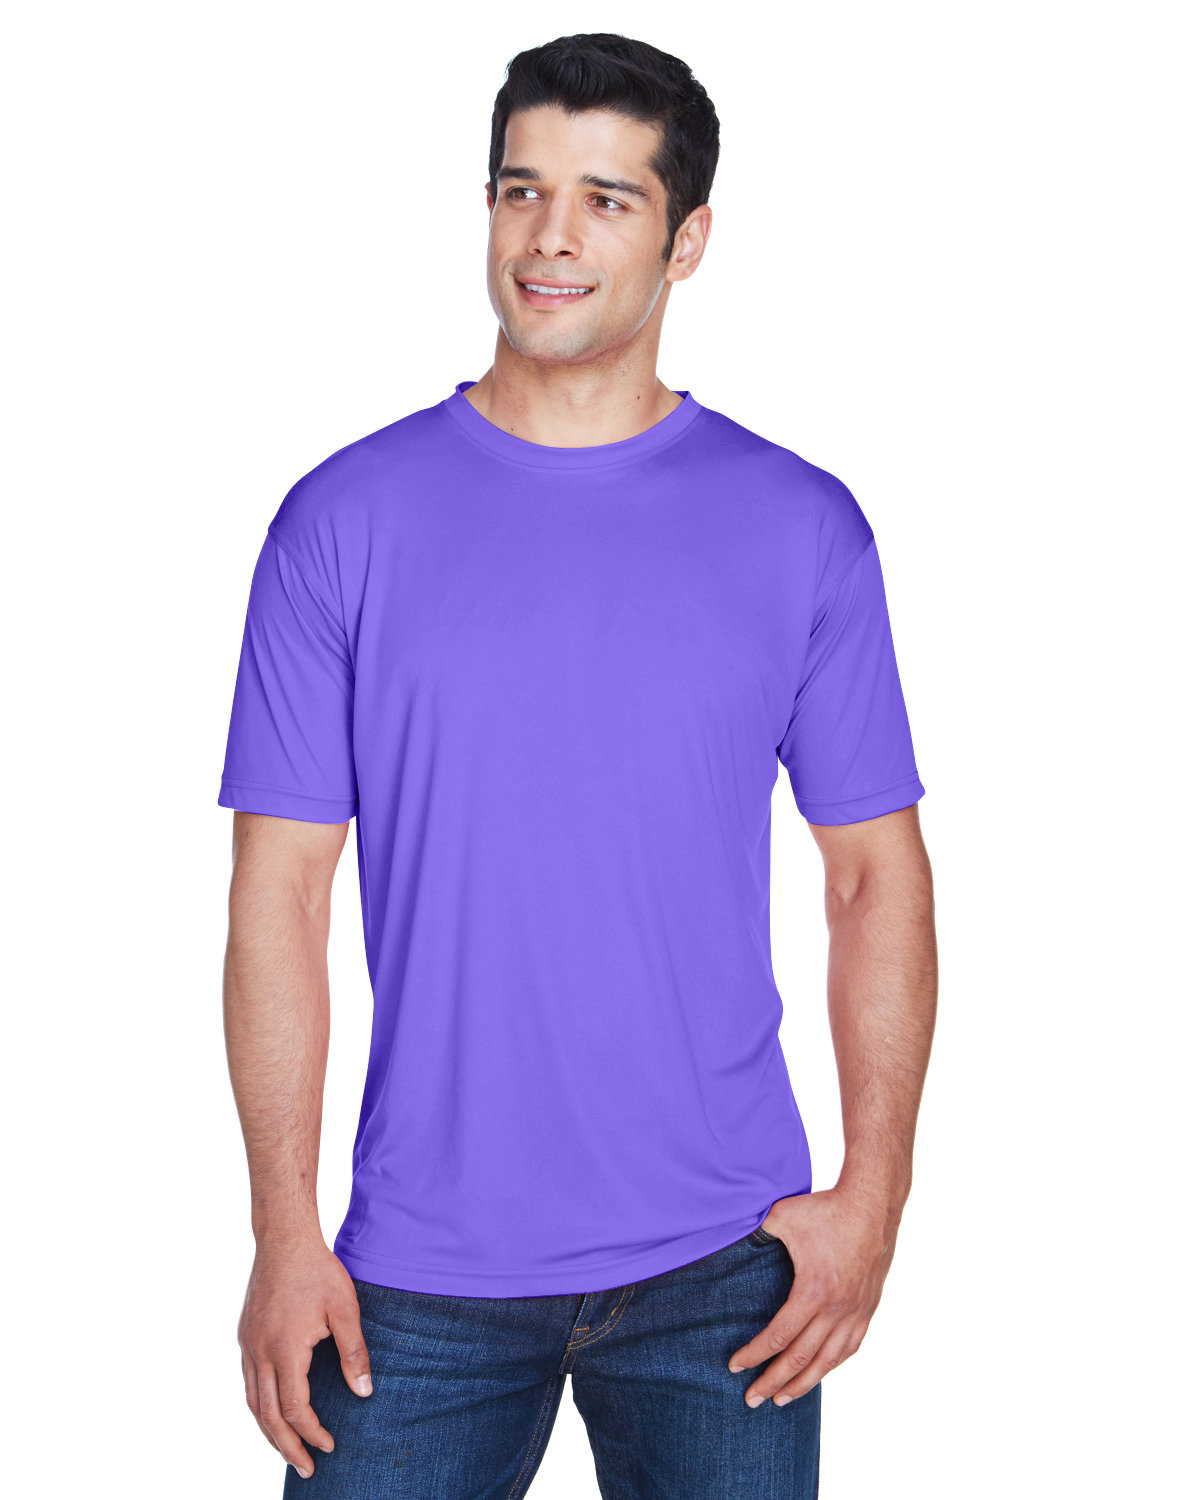 Short Sleeves Side Zipper Panel T-shirt  Best mens t shirts, Mens tshirts,  Mens workout clothes